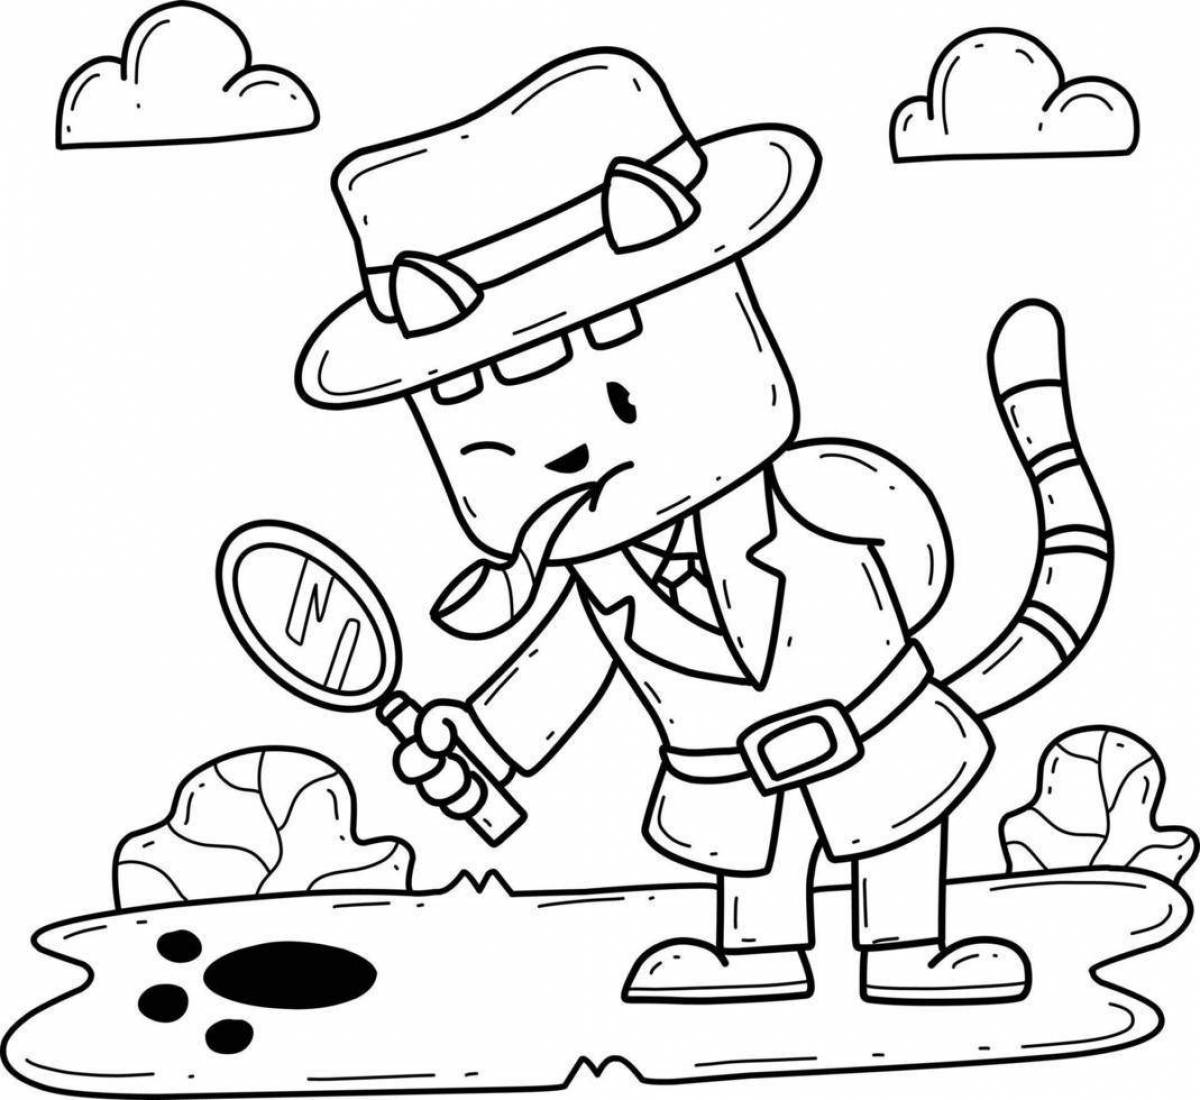 Adventurous detective coloring page